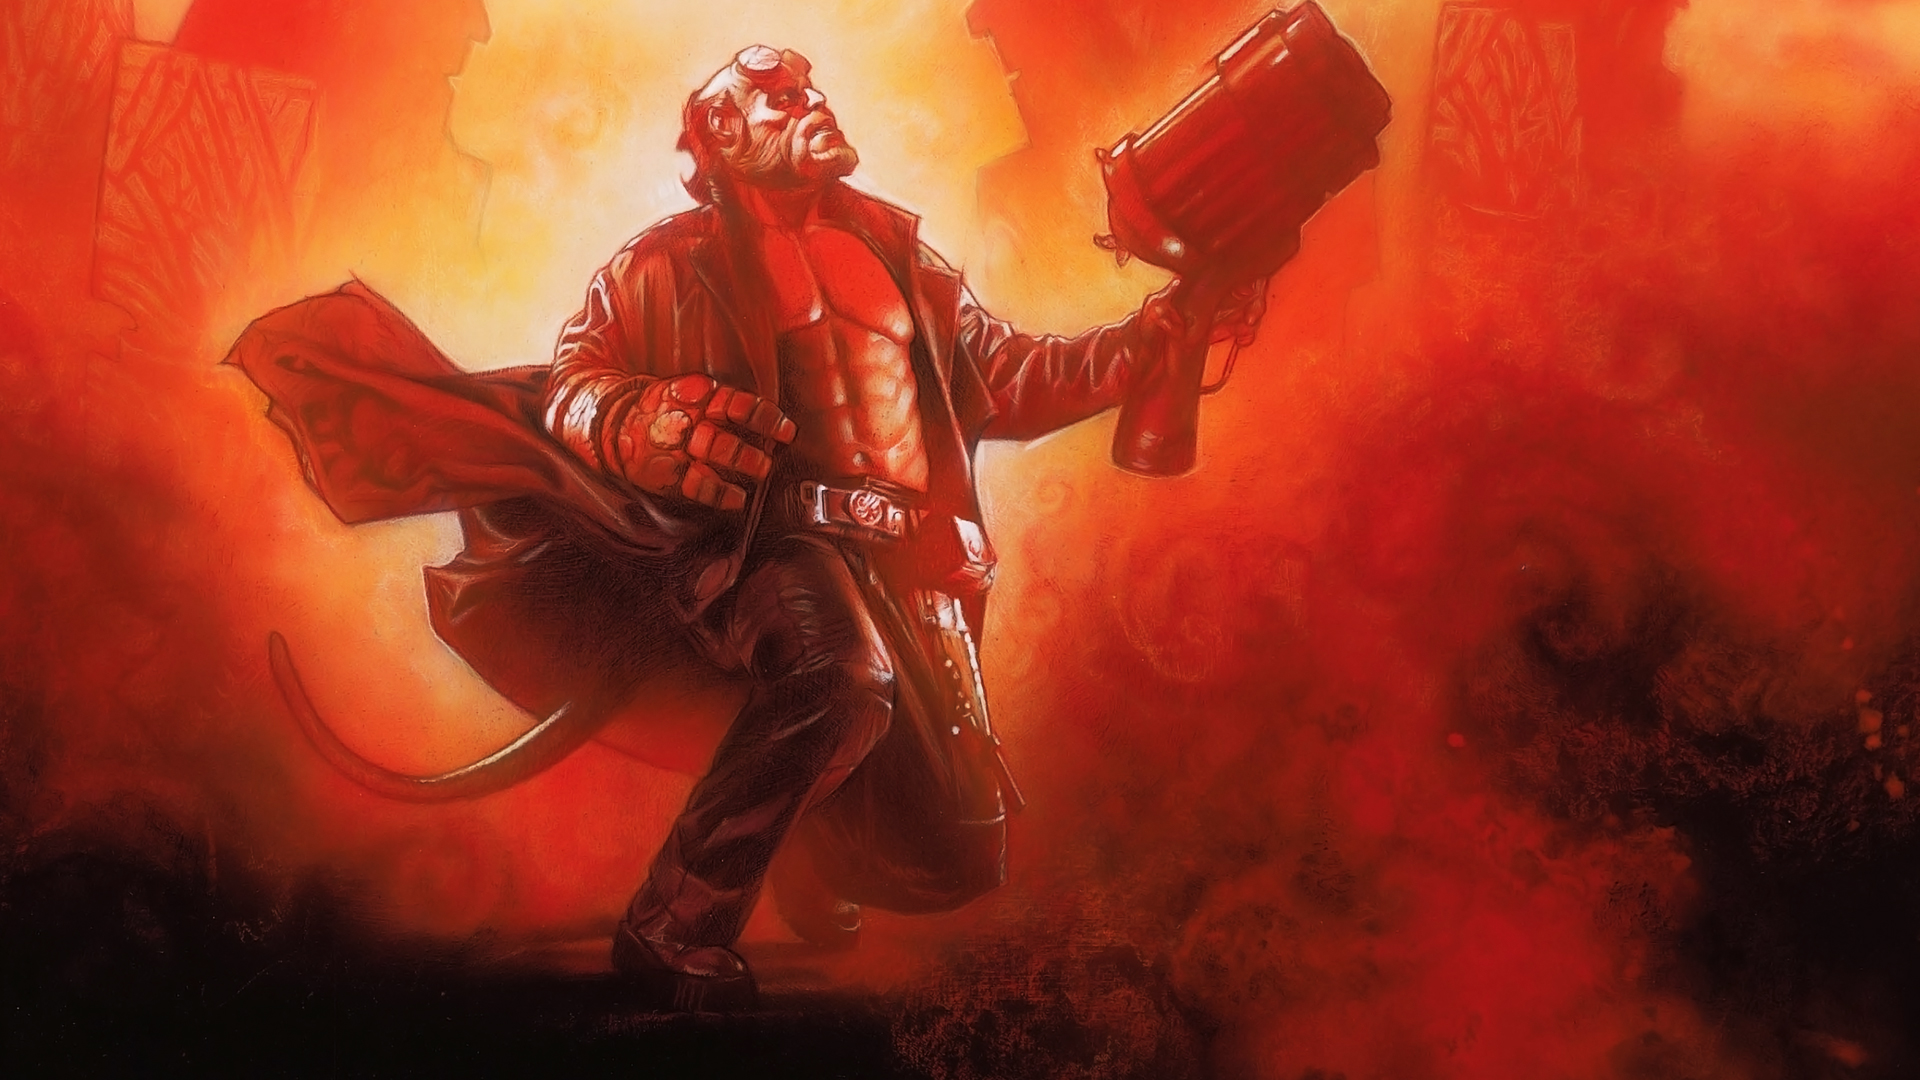 Hq Hellboy Wallpaper